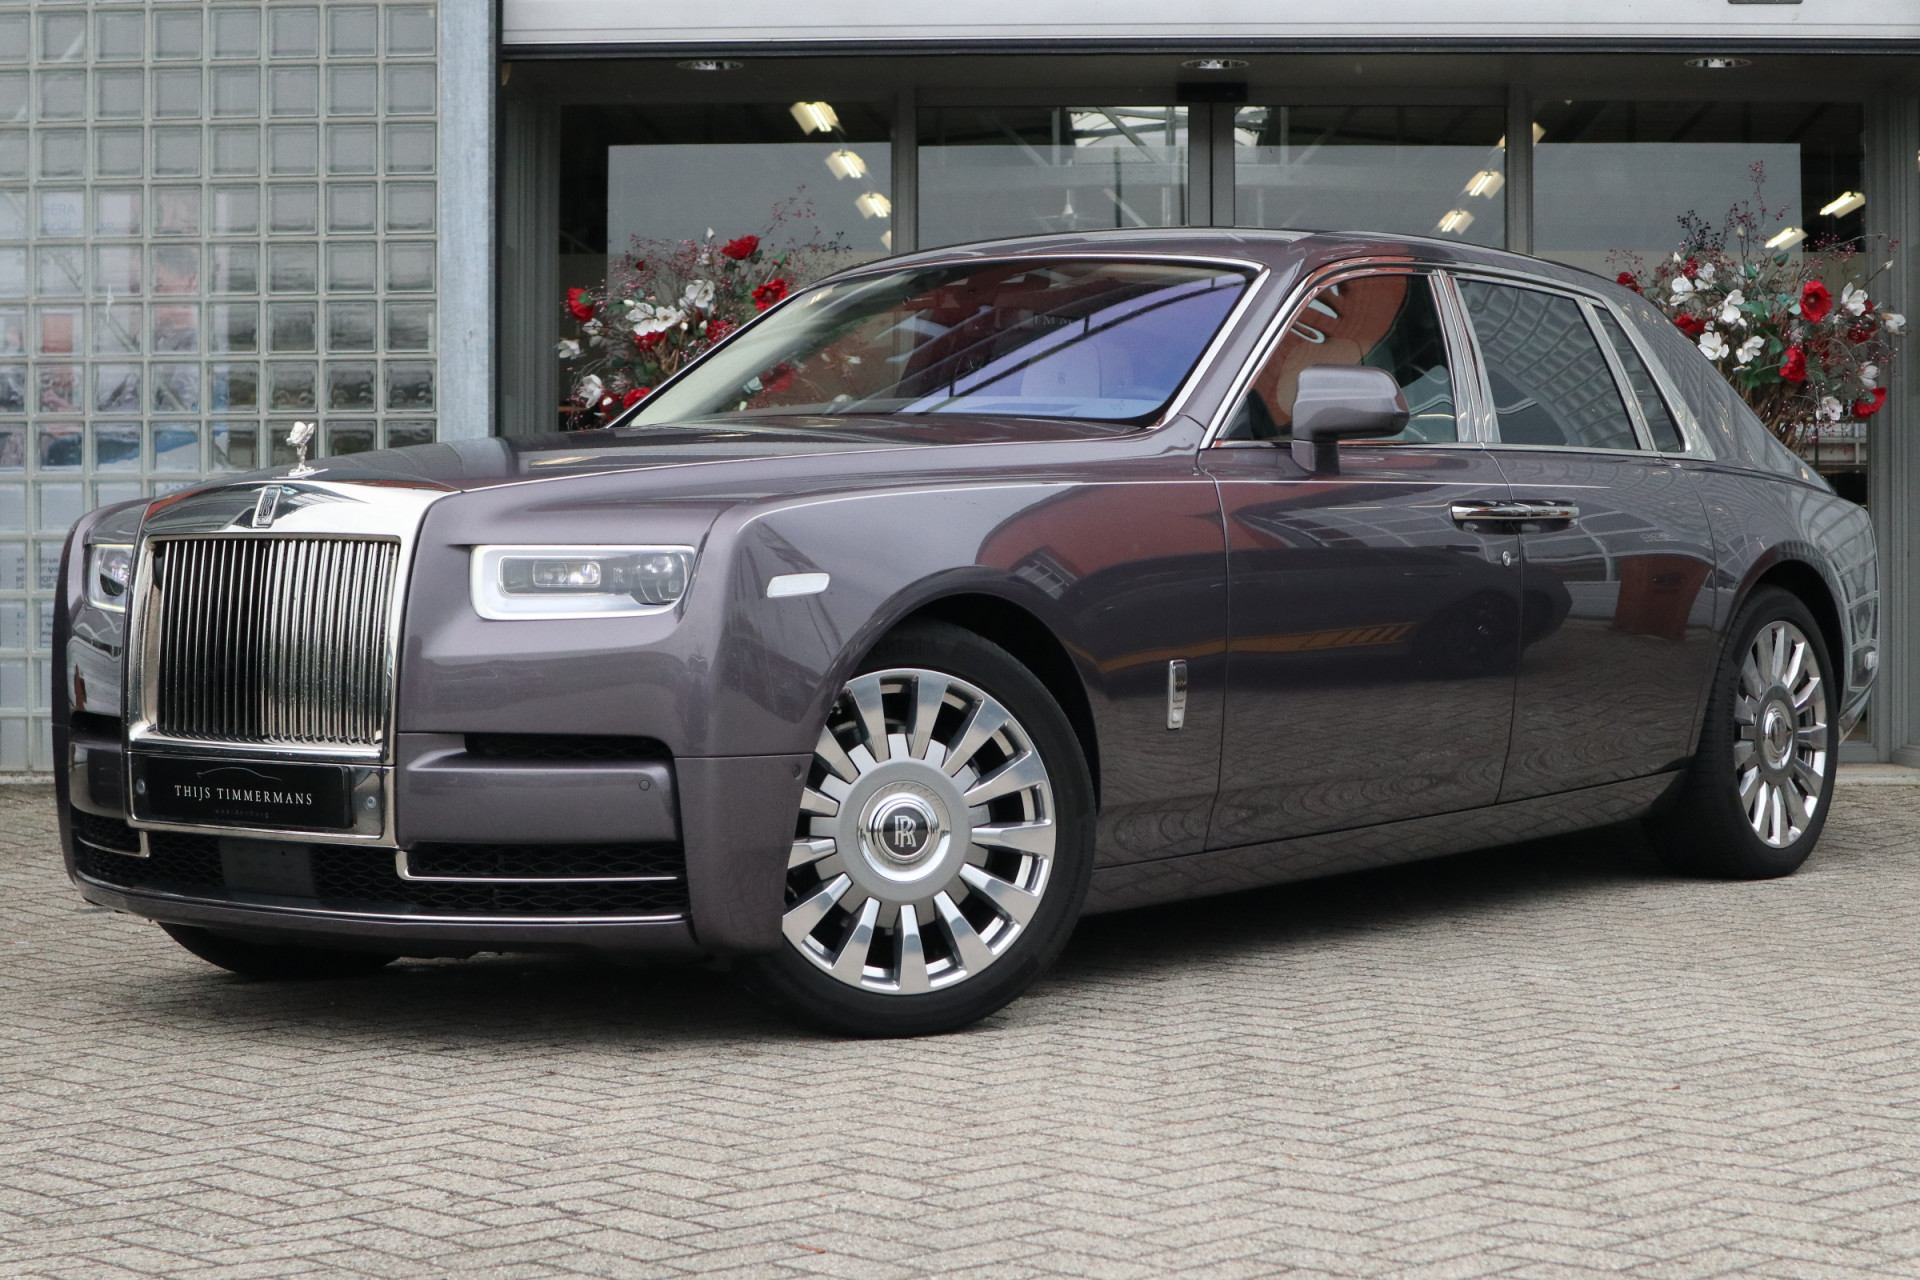 Rolls-Royce Phantom, Peter Gillis, Massa is Kassa